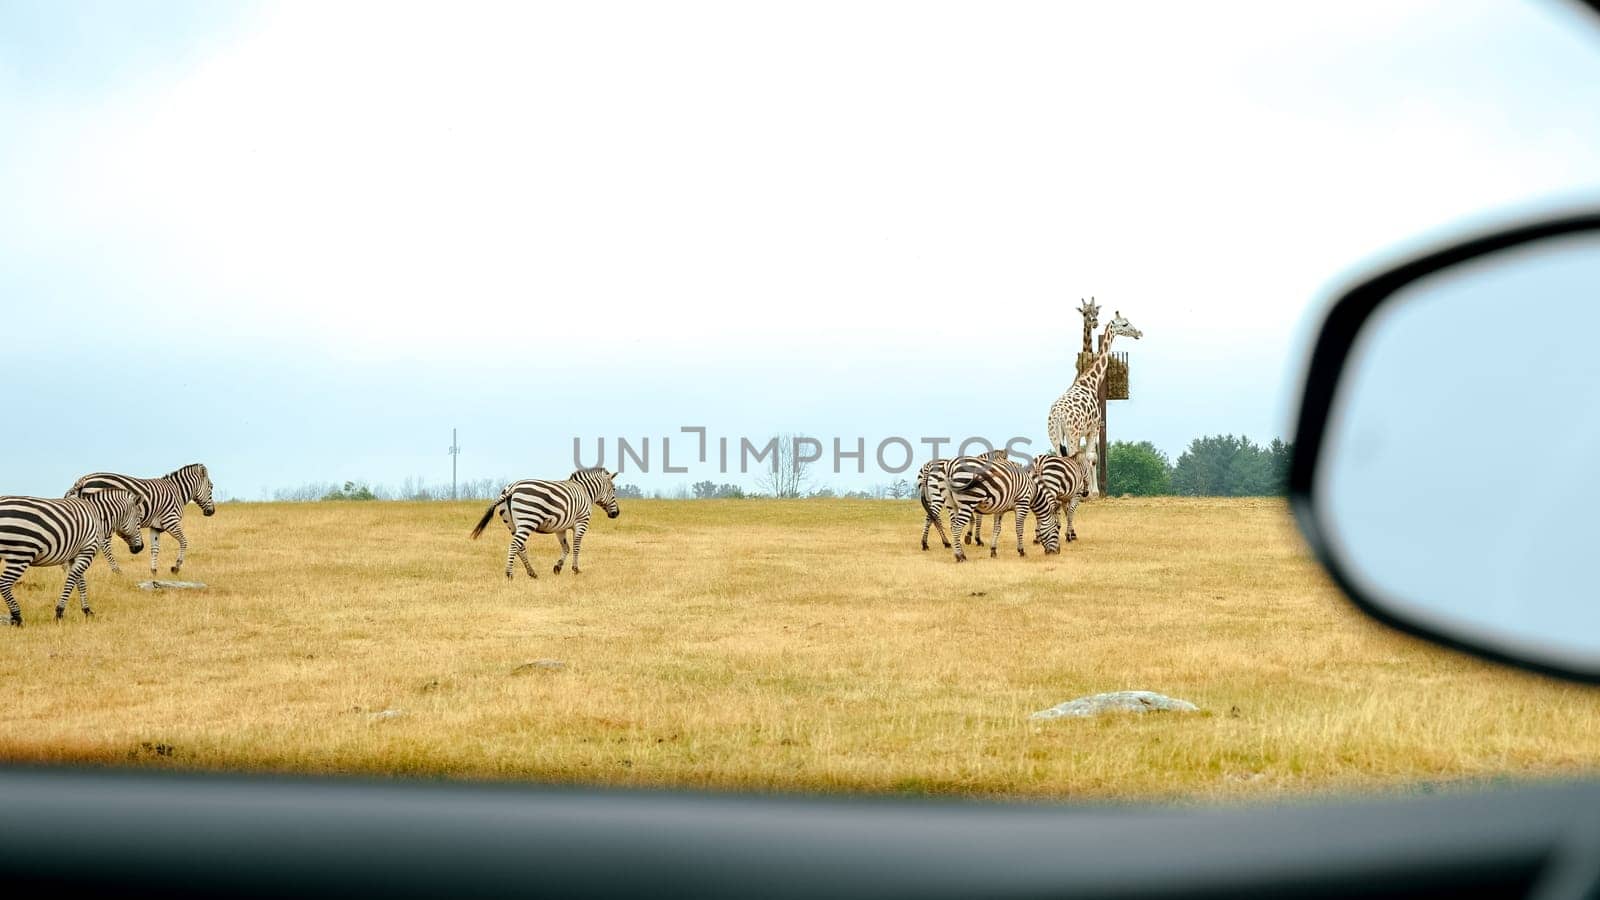 Group of wild zebras, giraffe eating grass in safari zoo park. Flock of zebras in the park. Wild animals at distance. by JuliaDorian